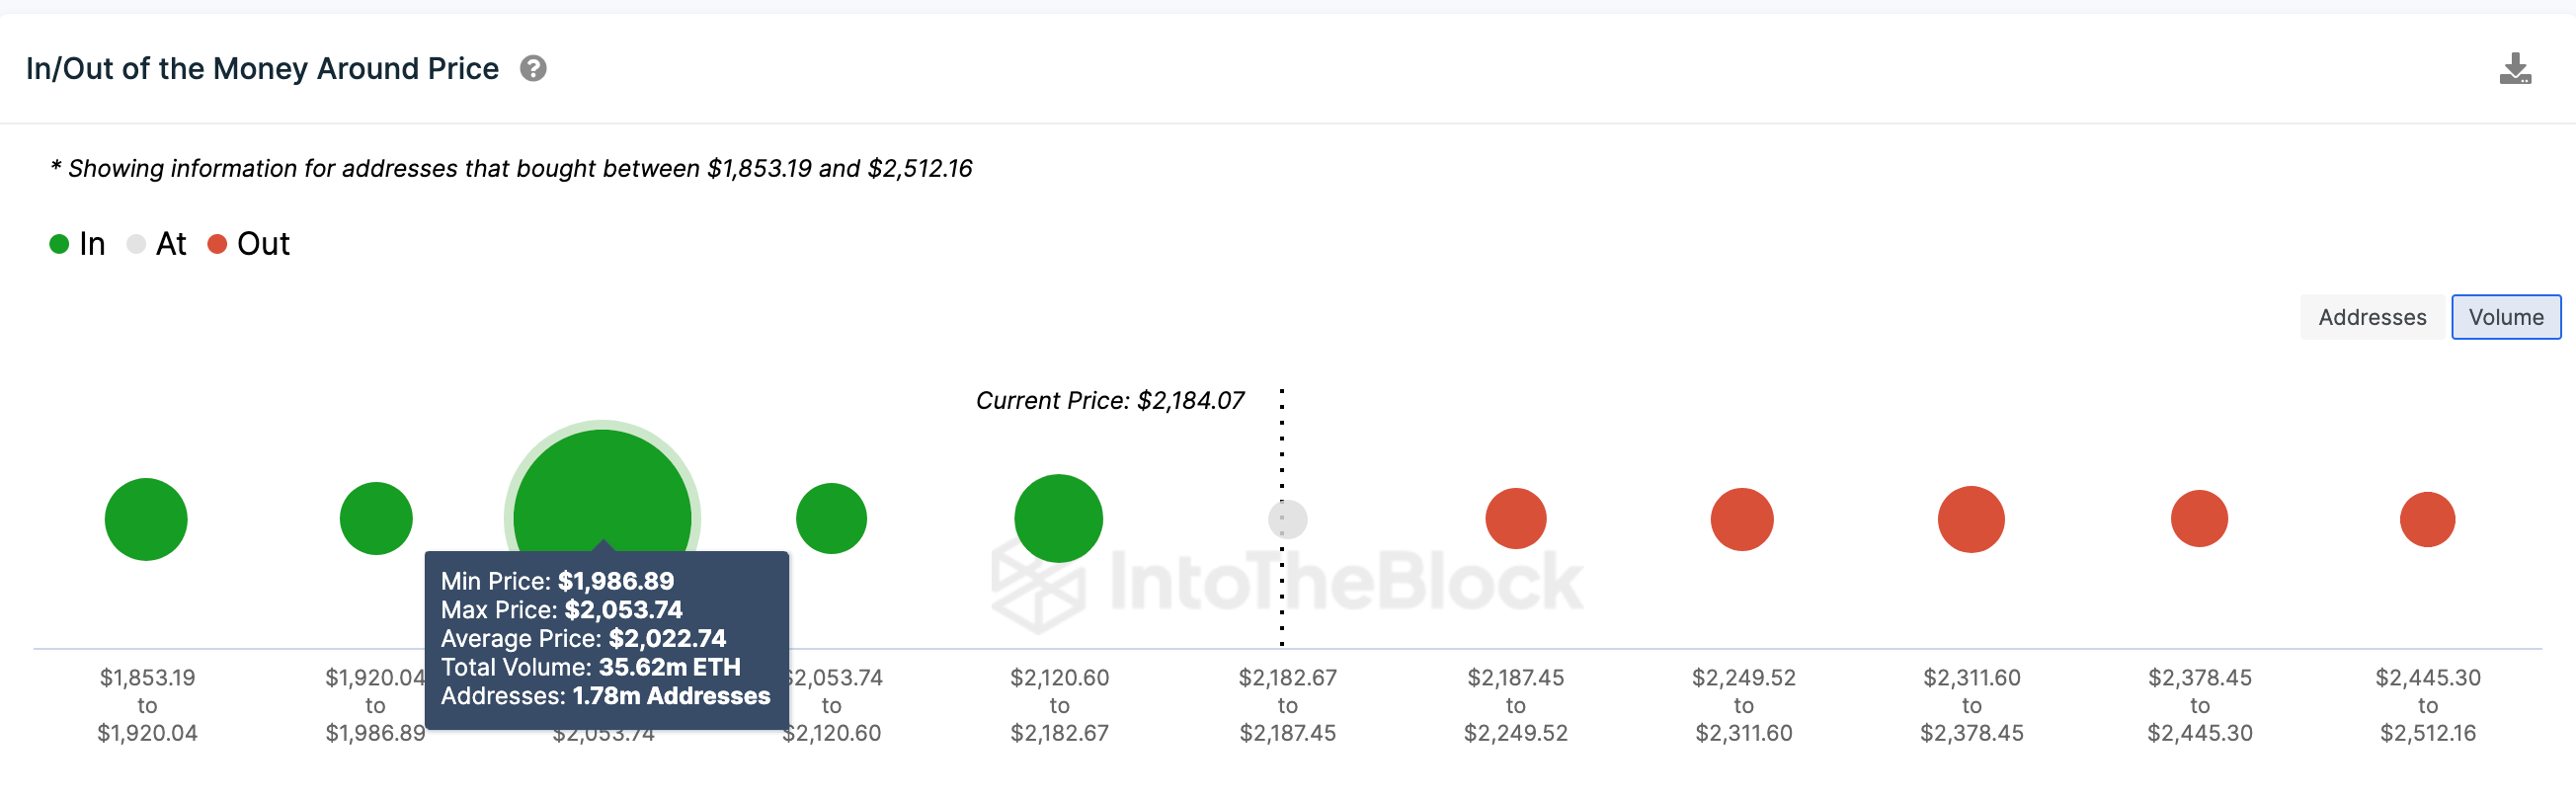 Ethereum (ETH) Price Analysis | IOMAP data | Source: IntoTheBlock